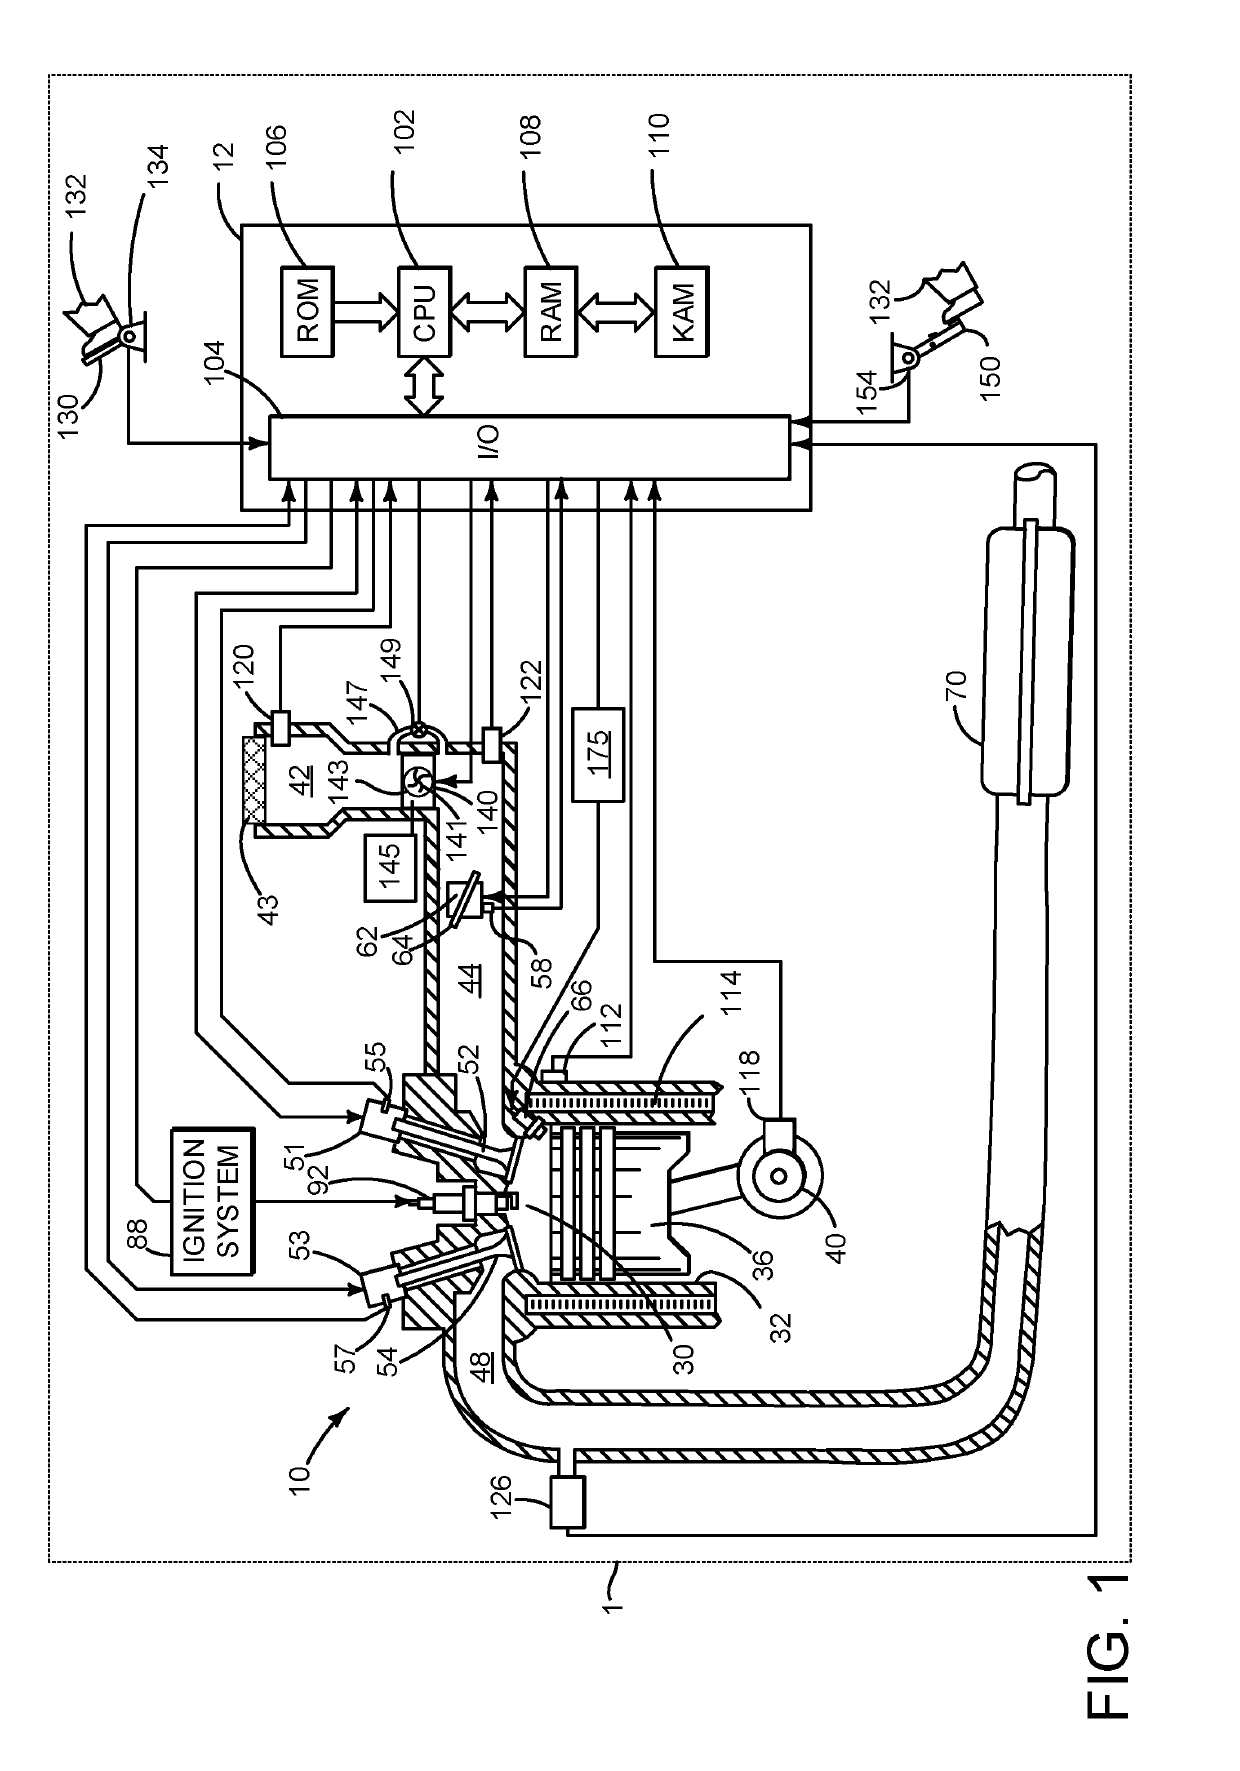 System and method for providing engine braking